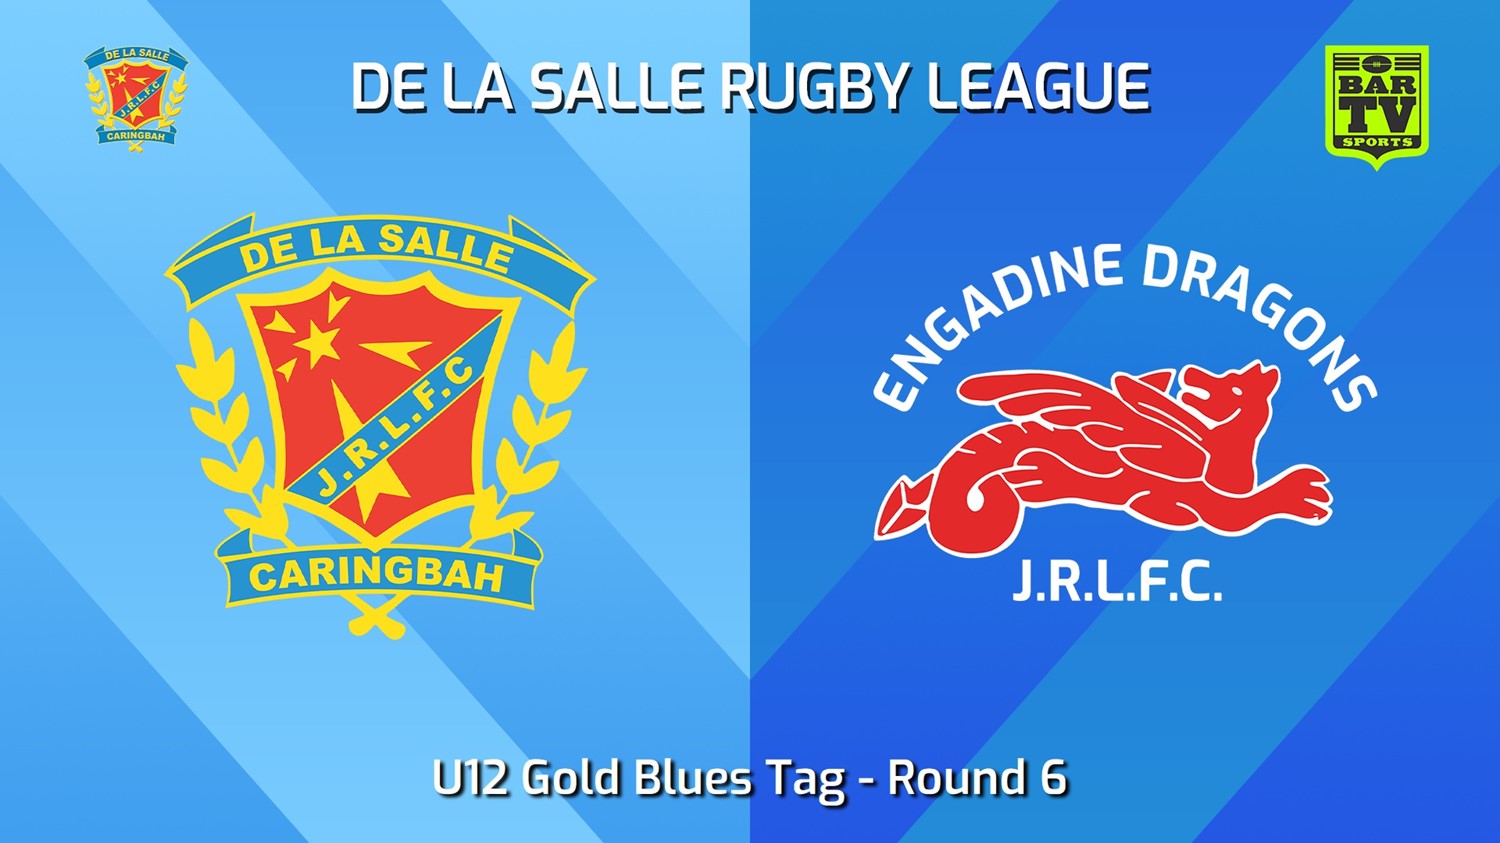 240526-video-De La Salle Round 6 - U12 Gold Blues Tag - De La Salle v Engadine Dragons Slate Image